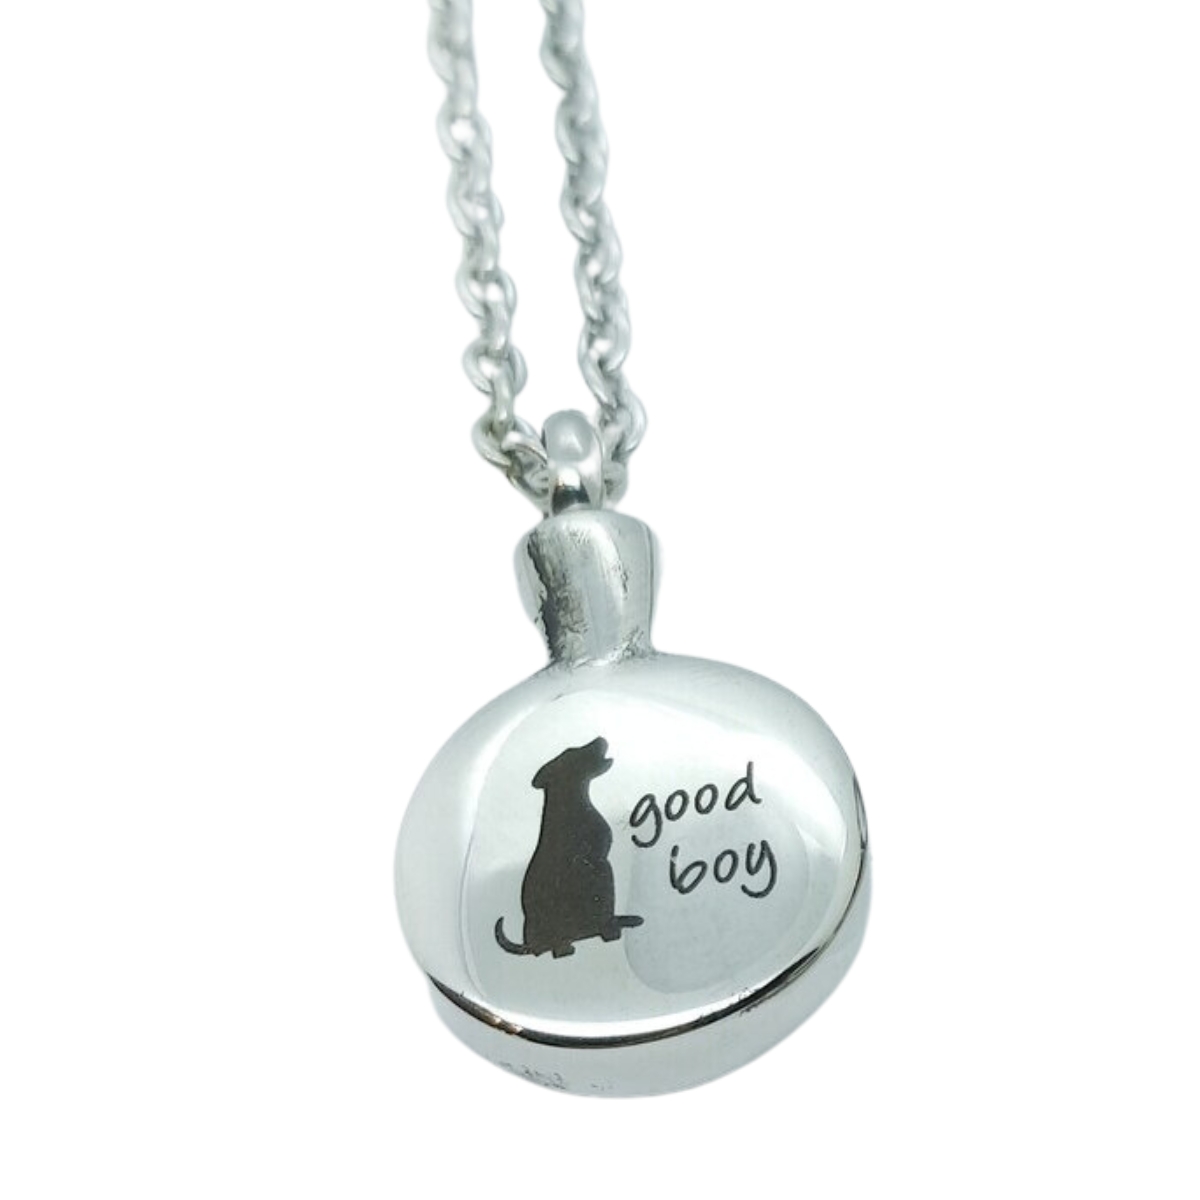 Good Boy Keepsake Necklace - for dogs